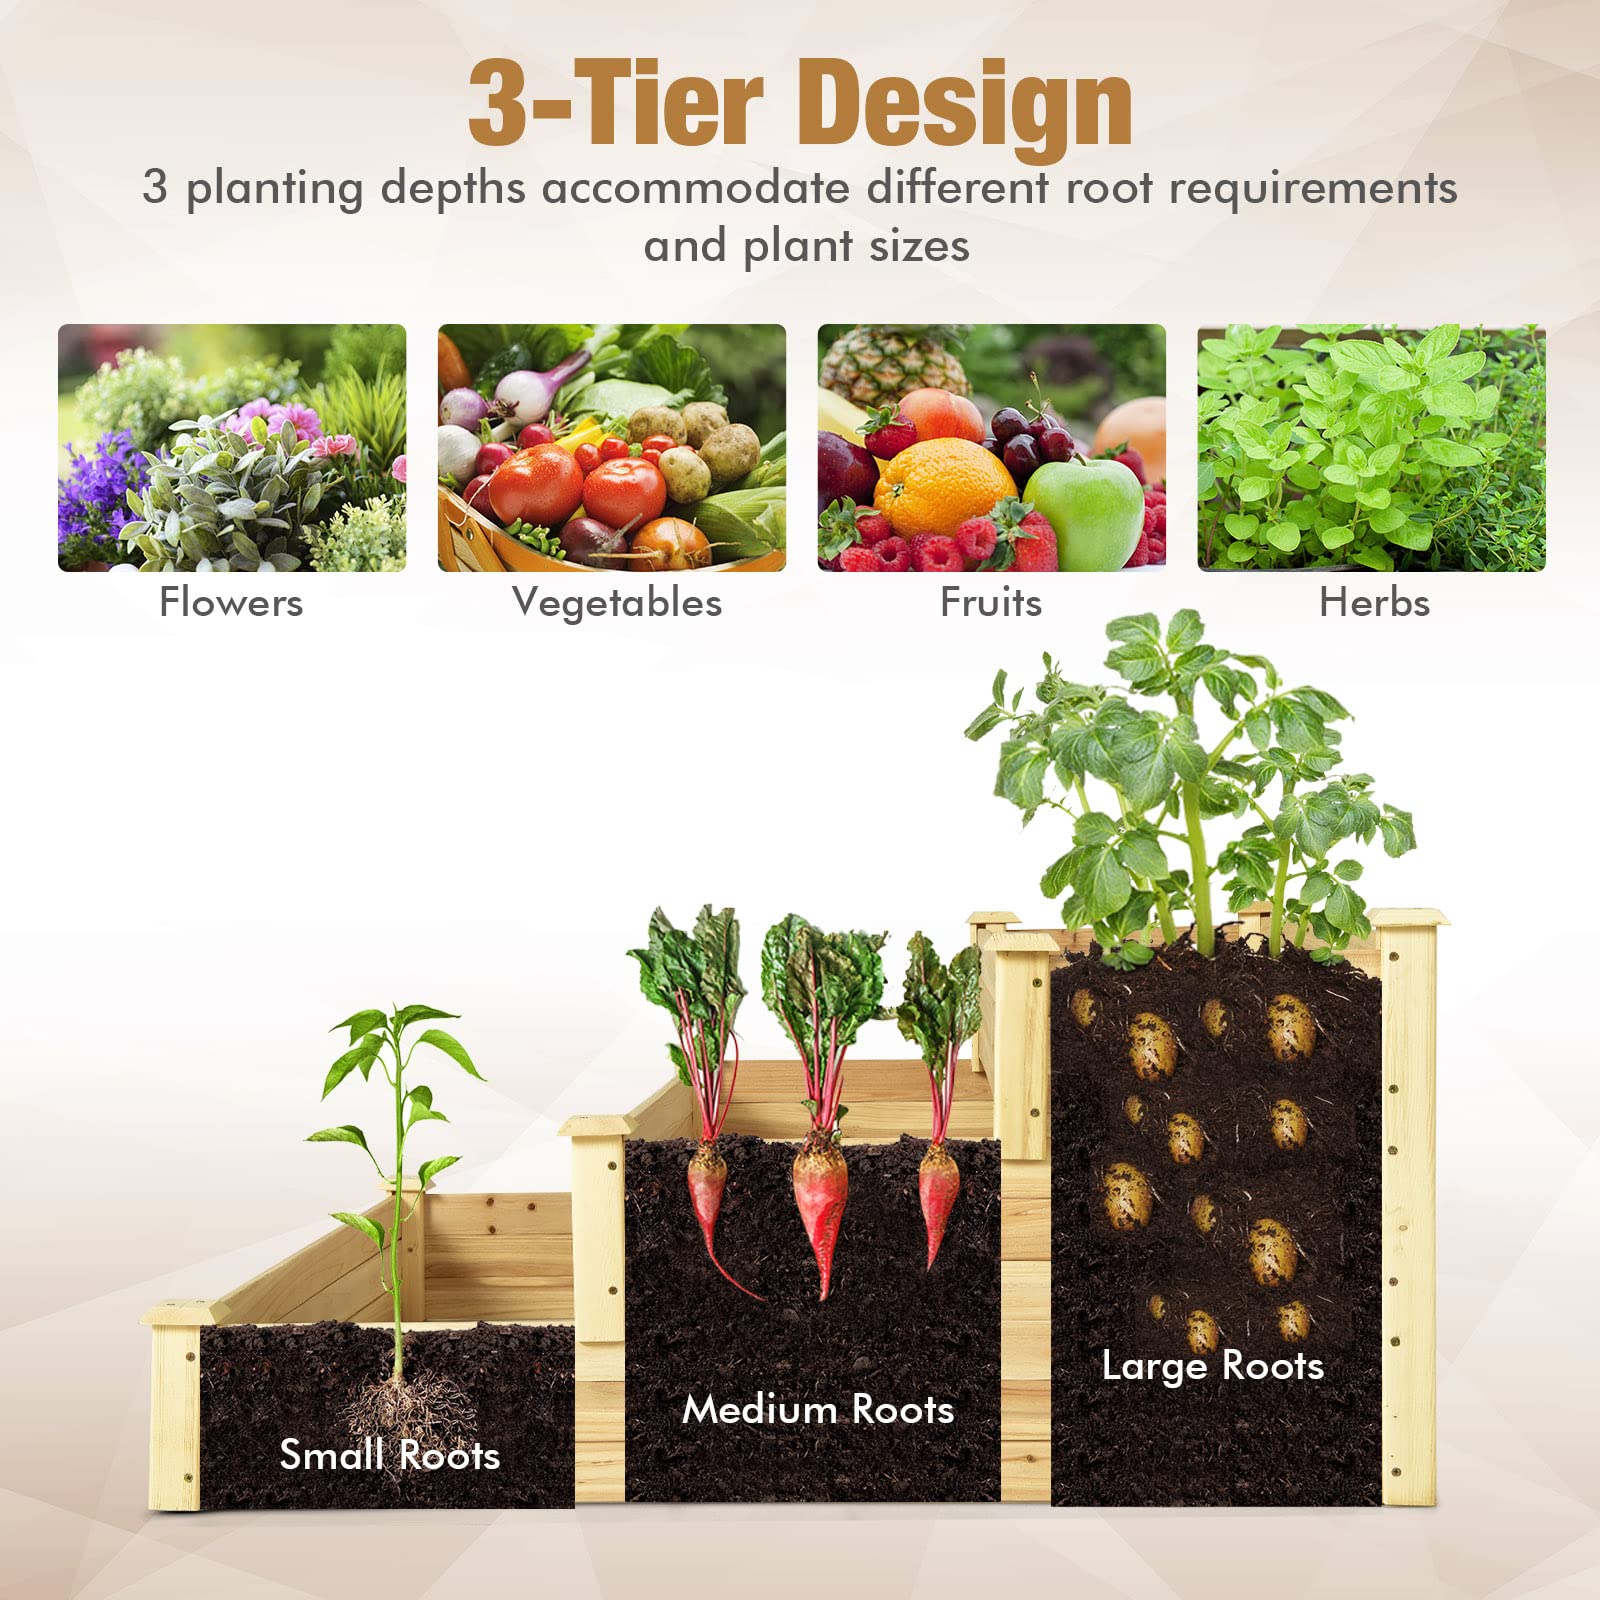 Giantex 3 Tier Raised Garden Bed, Wood Planter Box 48 x 48 x 22 Inch Vegetable Flower Herb Fruit Growing Bed Kit